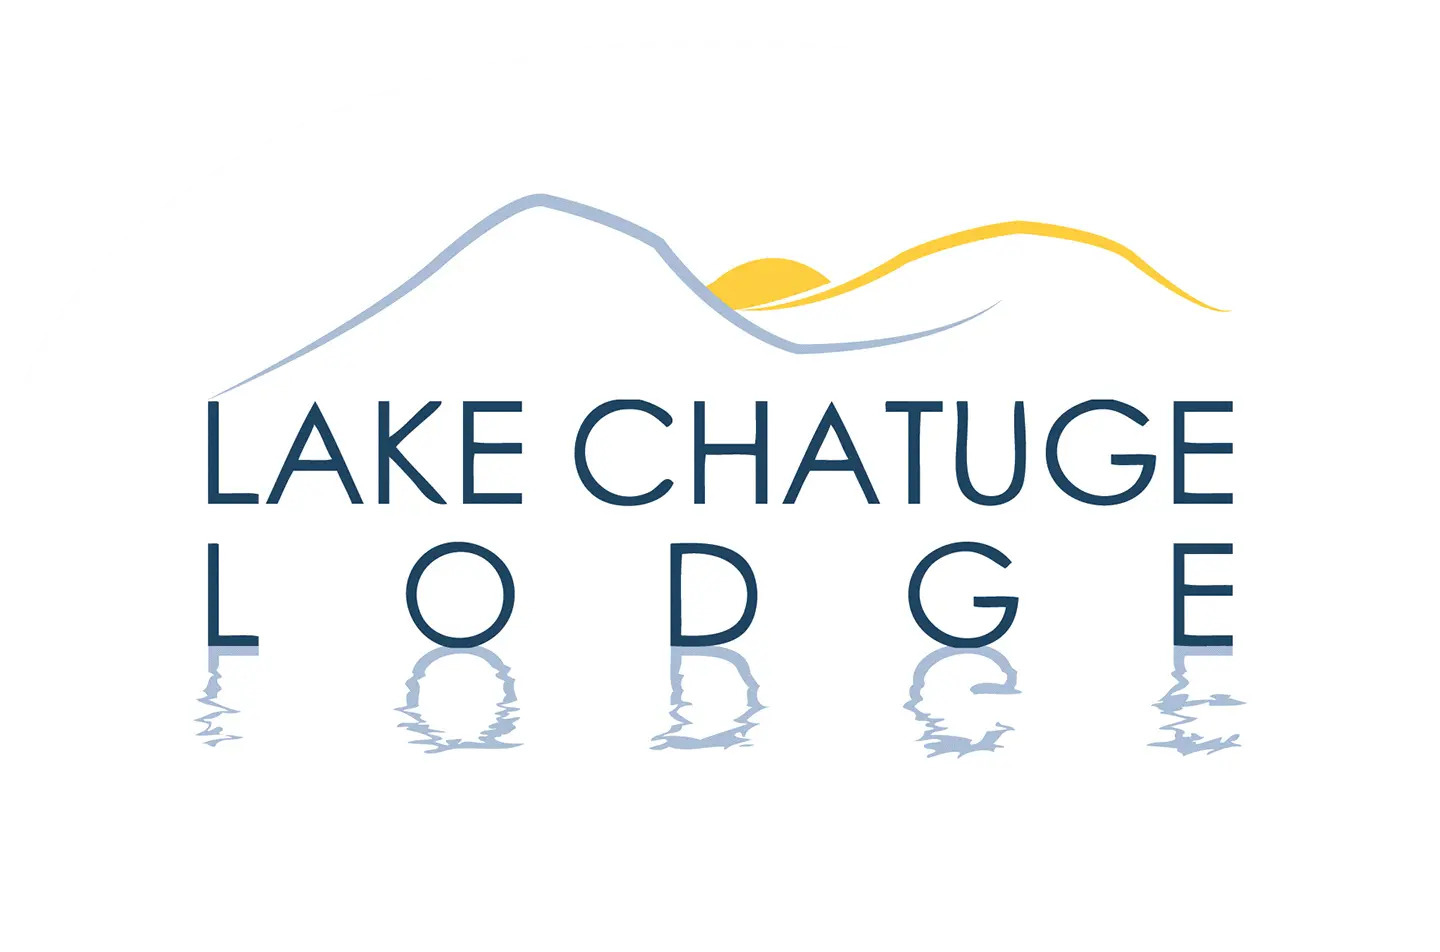 Lake Chatuge Lodge - Northeast Georgia Arts Tour